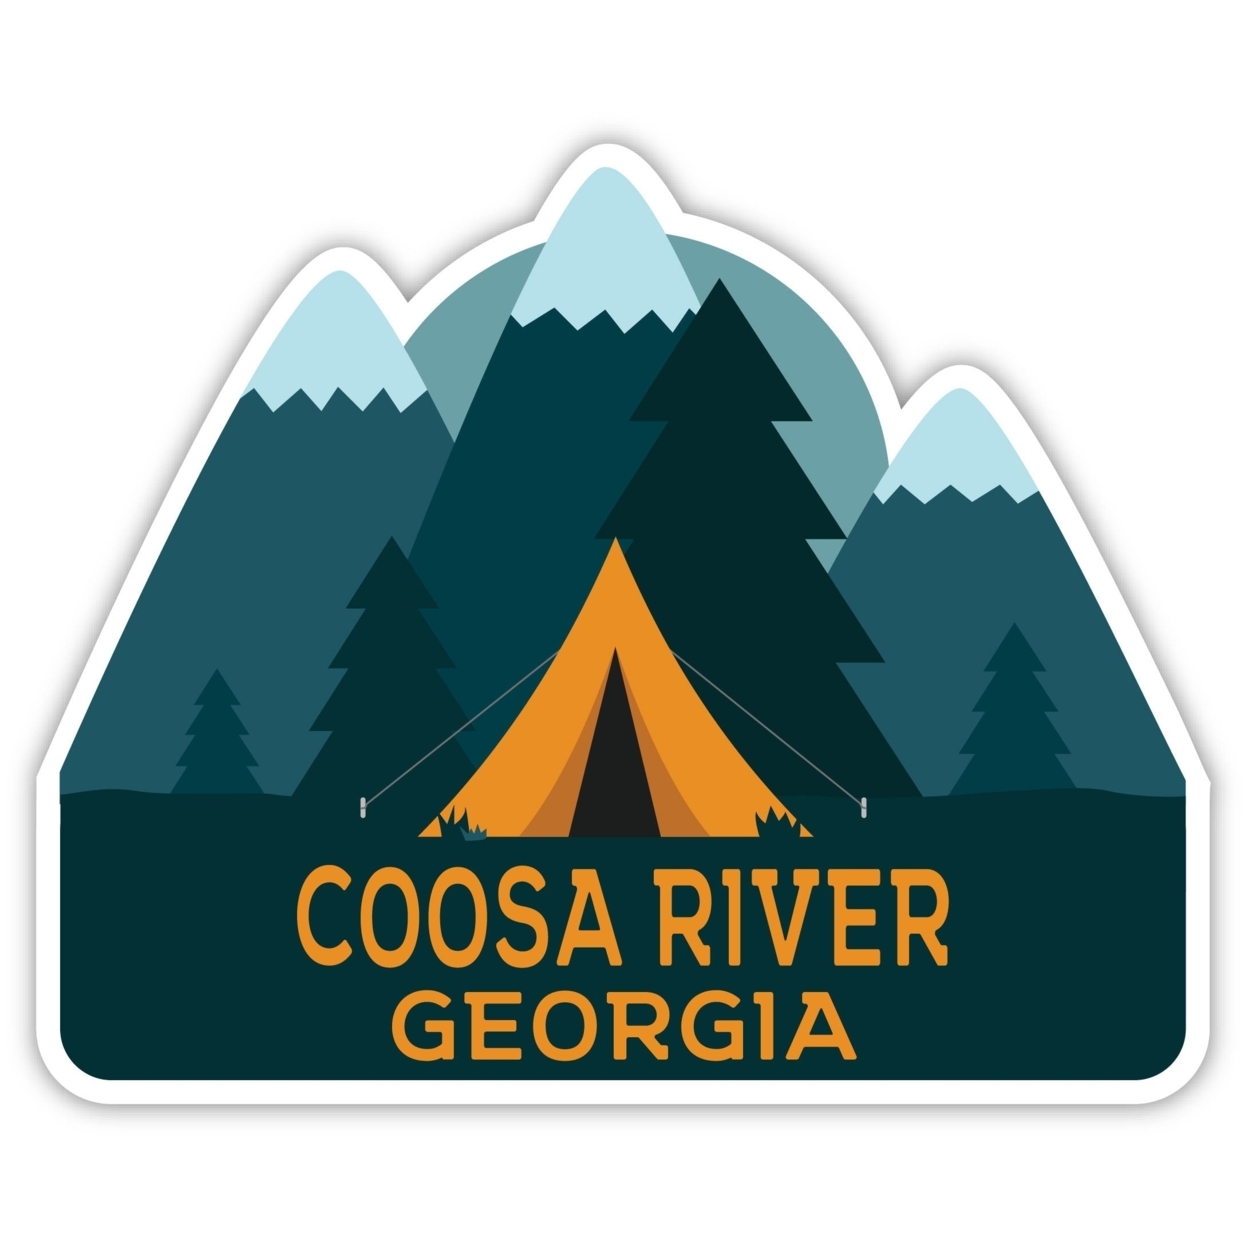 Coosa River Georgia Souvenir Decorative Stickers (Choose Theme And Size) - Single Unit, 8-Inch, Tent